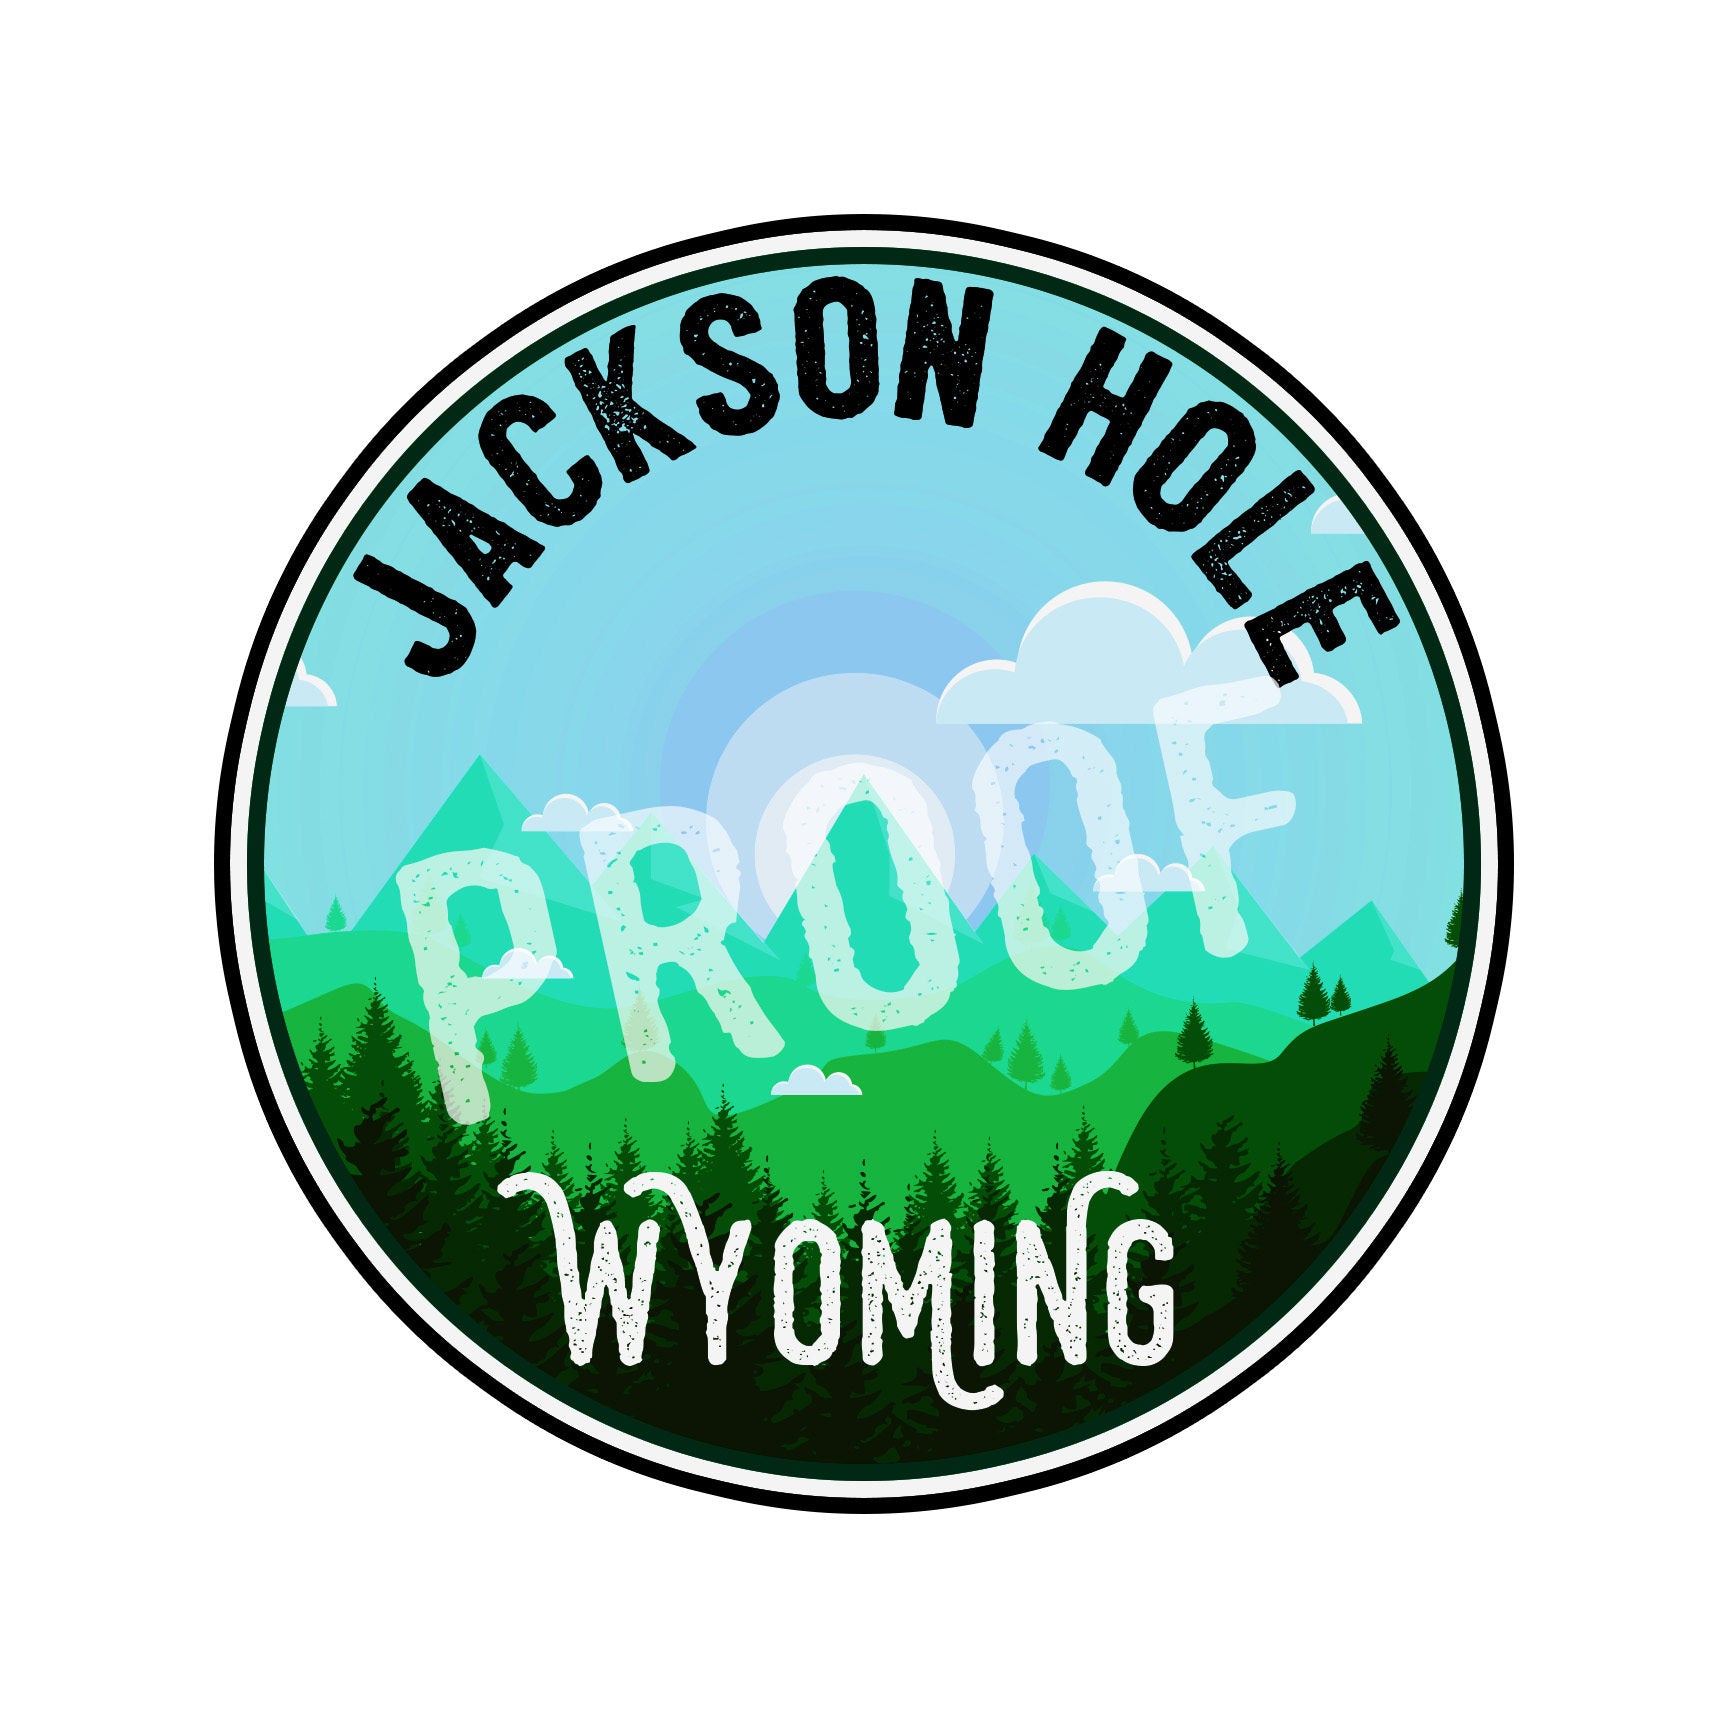 JACKSON HOLE WYOMING 3" Sticker Decal Mountain Skiing Ski Snowboard Snowboarding Nature